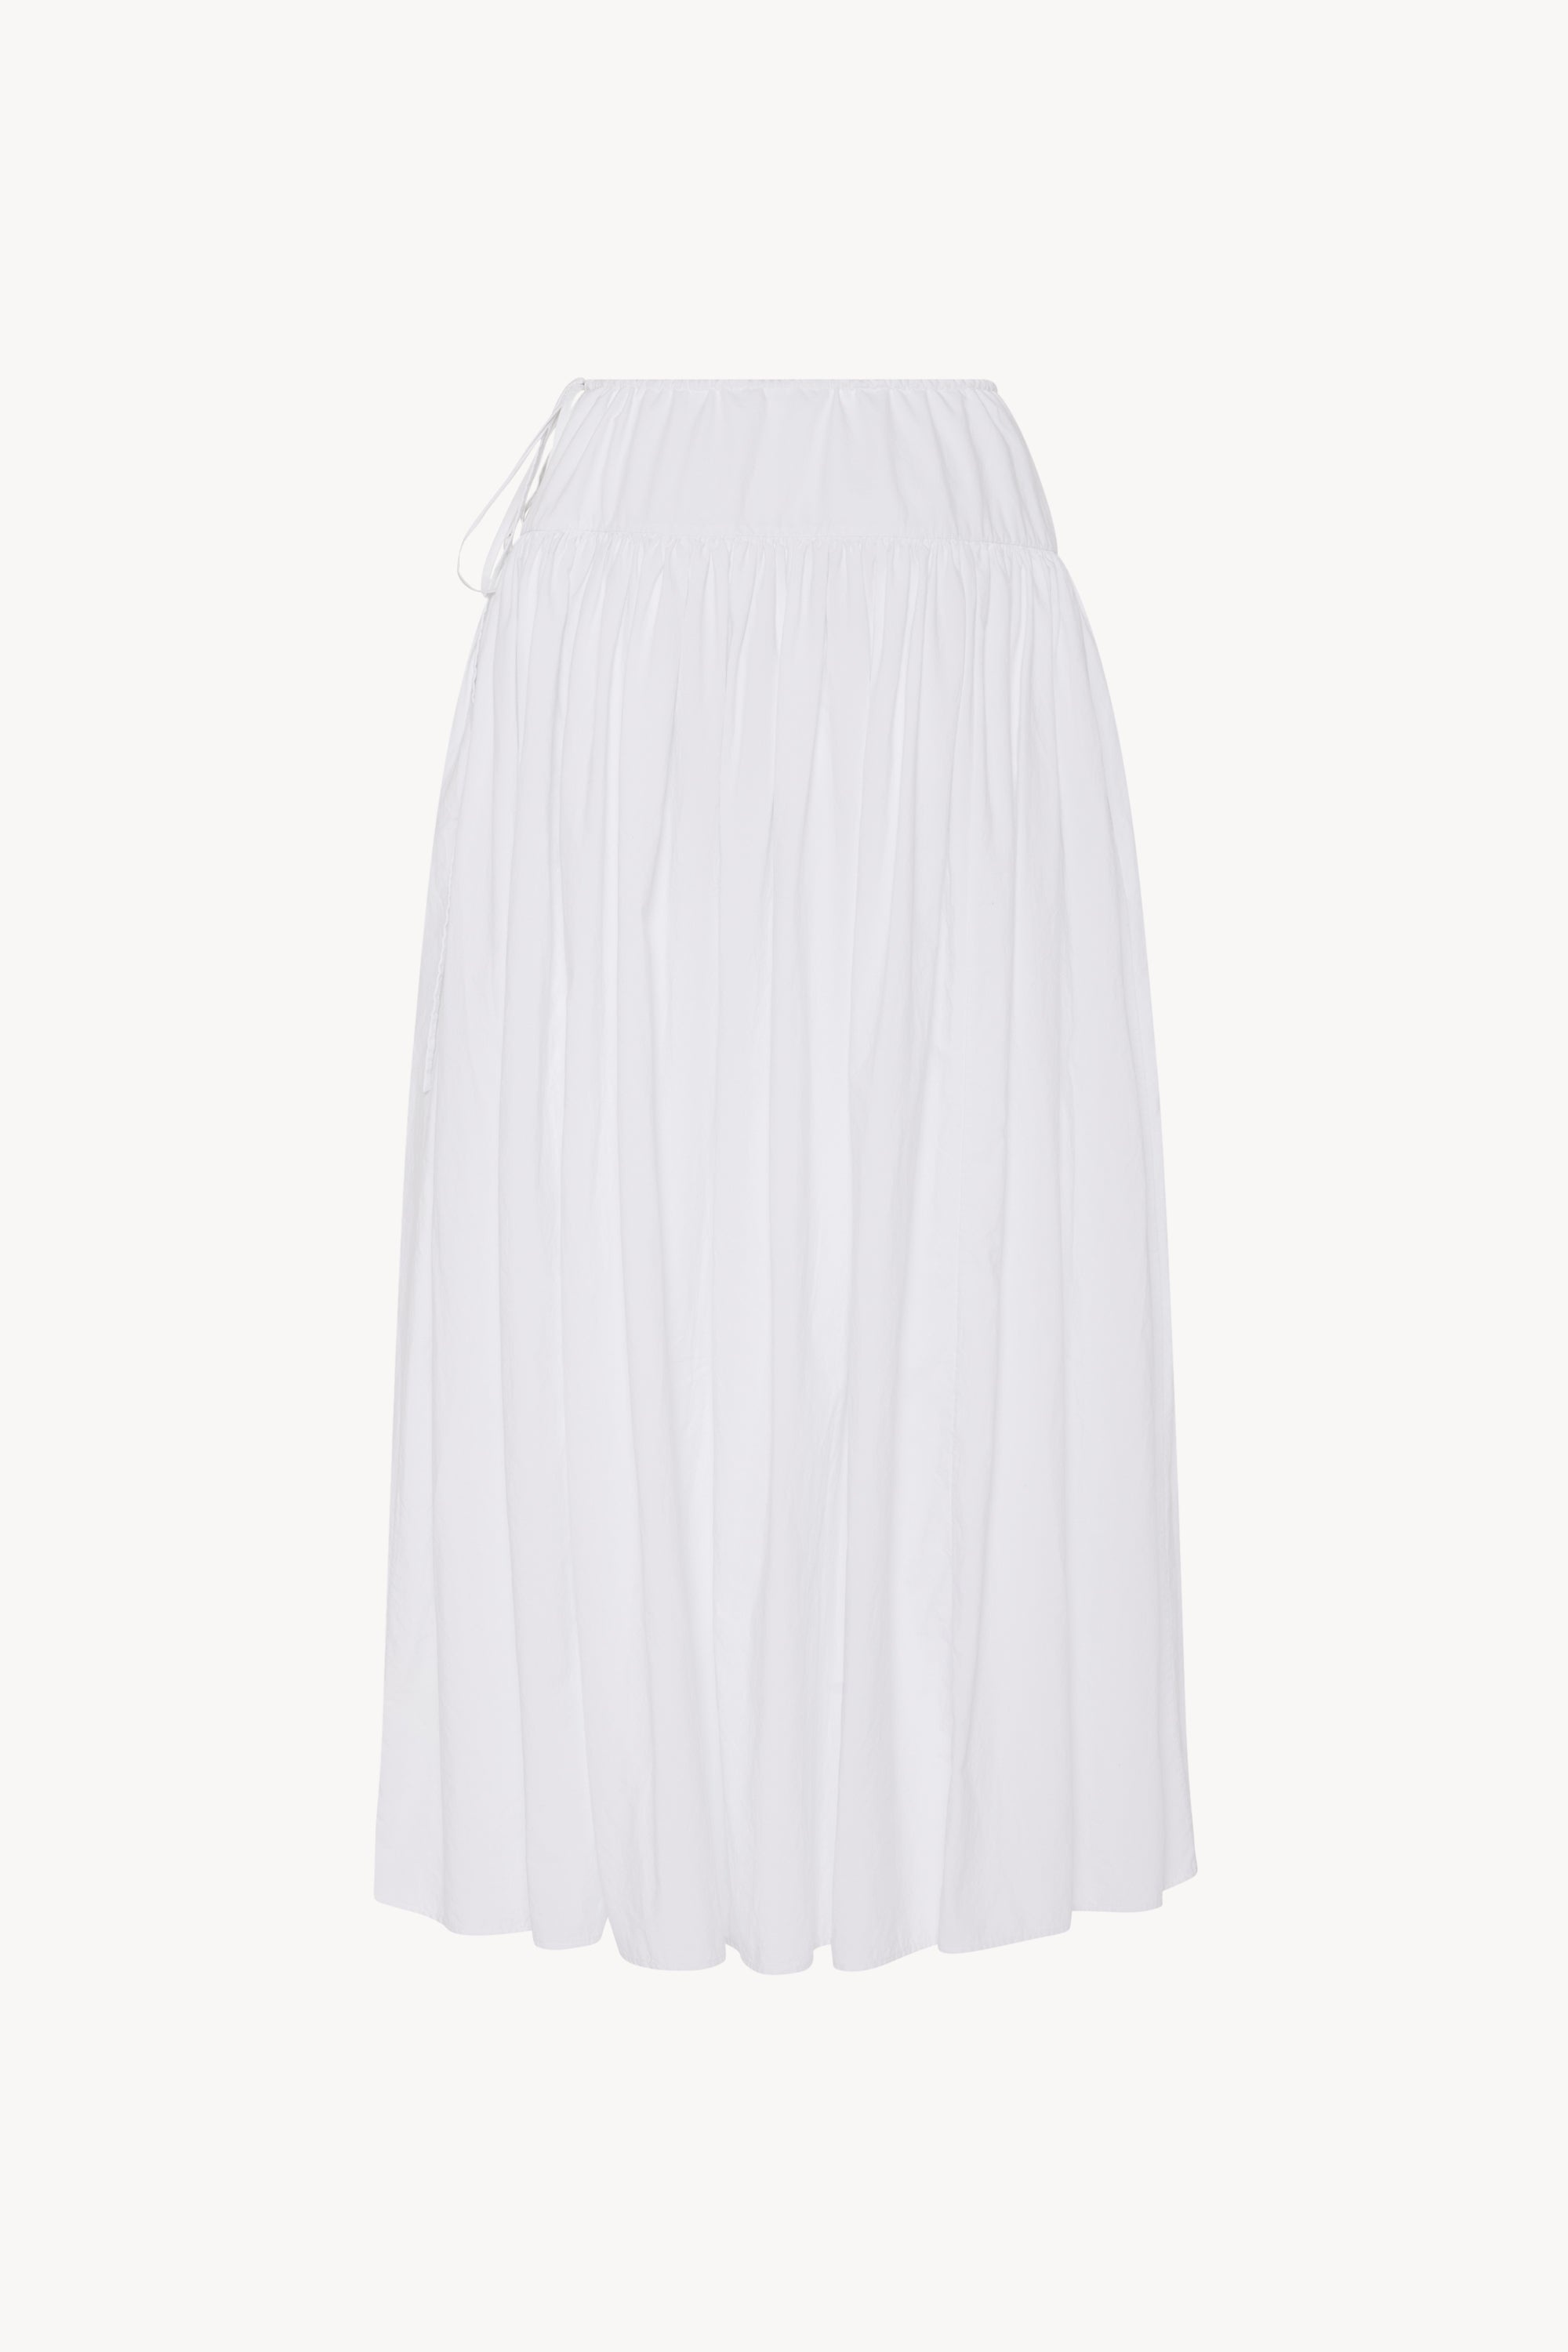 Leddie Skirt in Cotton - 2